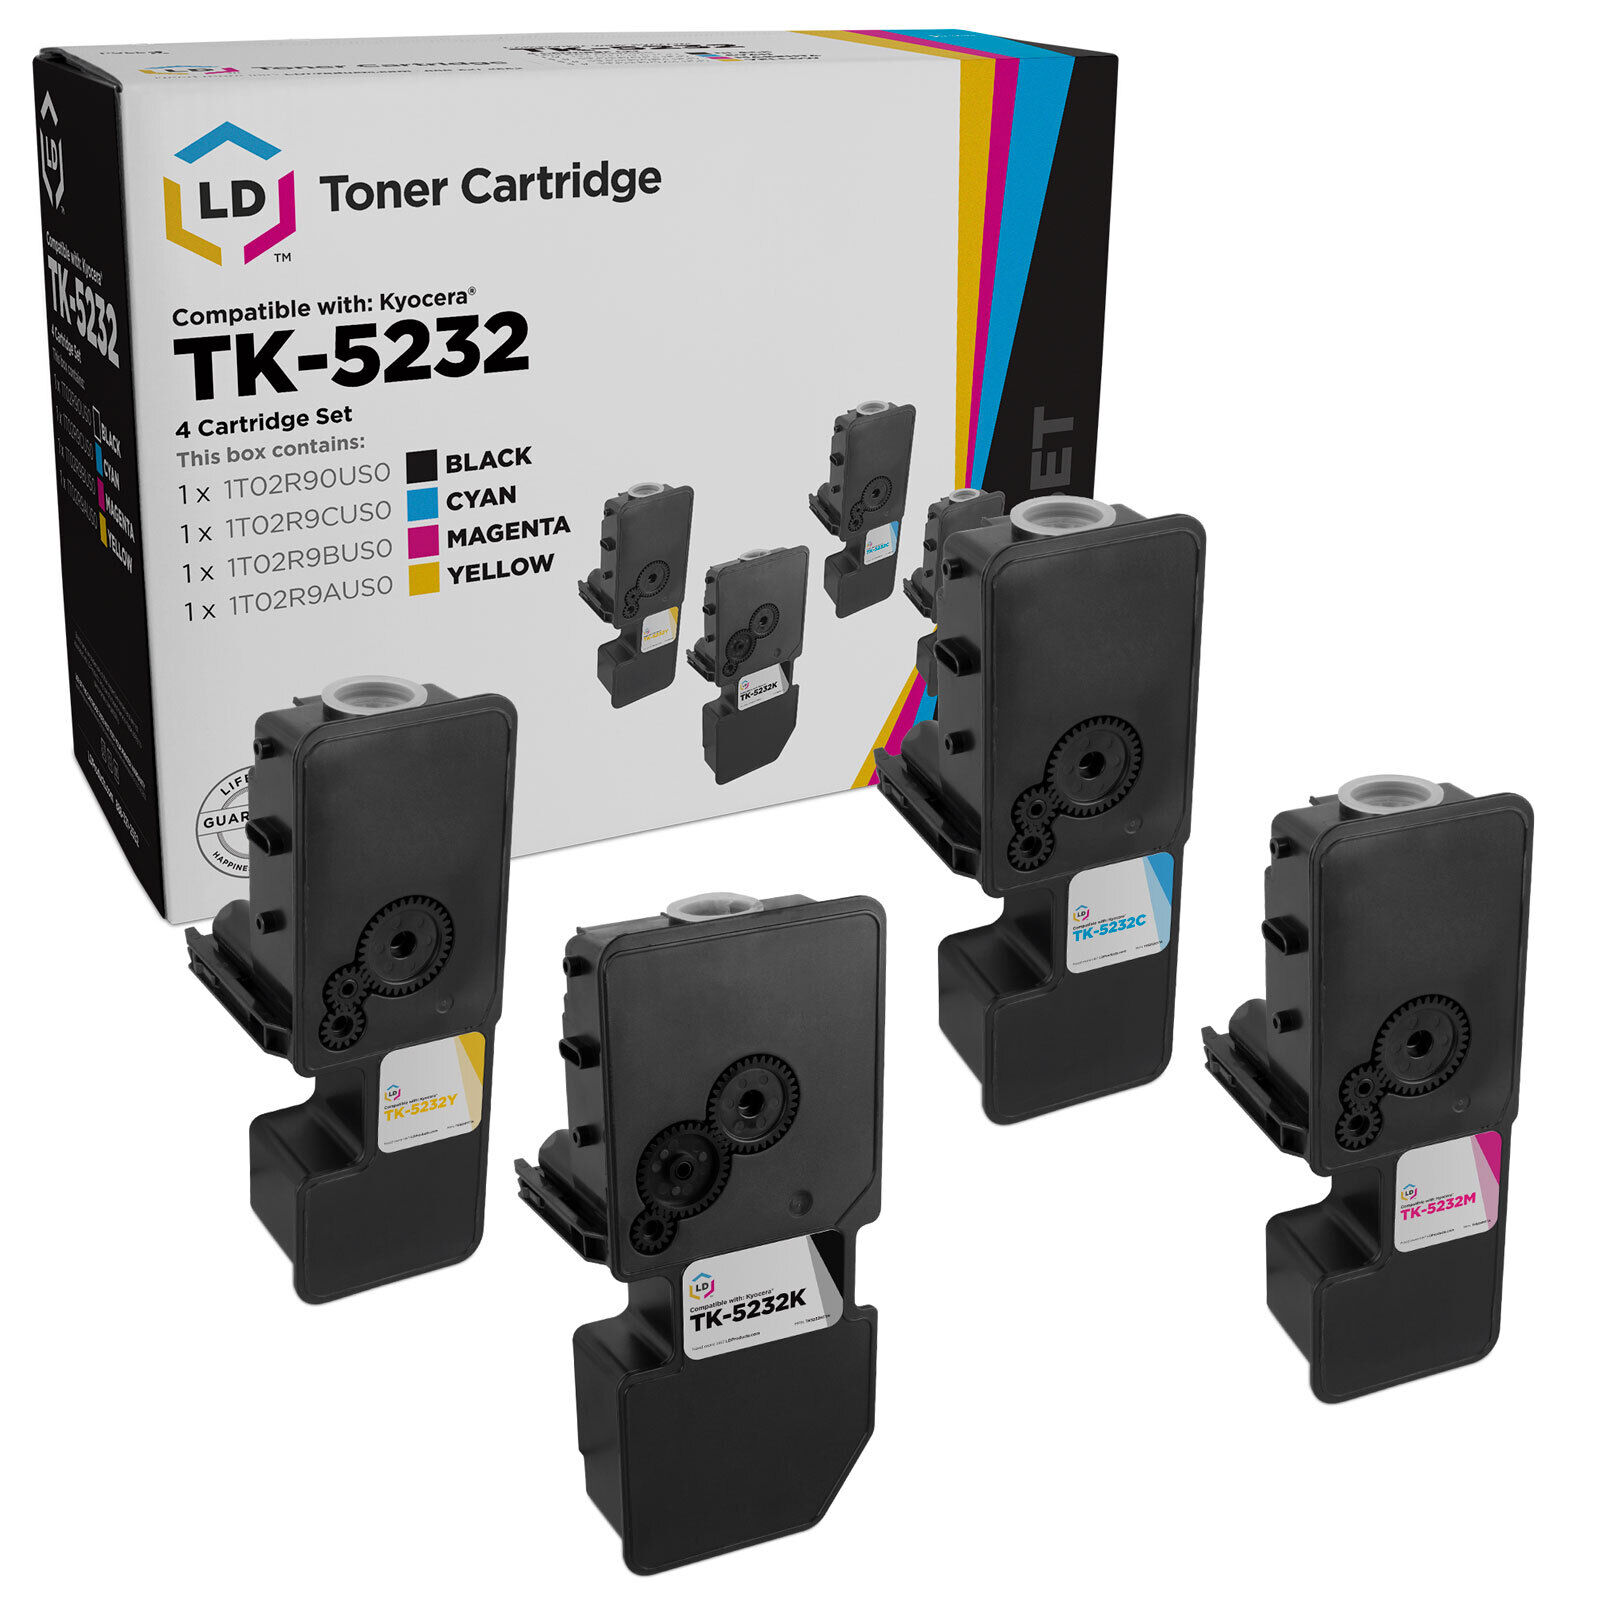 LD Compatible Kyocera TK-5232 Black, Cyan, Magenta, Yellow 4PK for M5521cdw